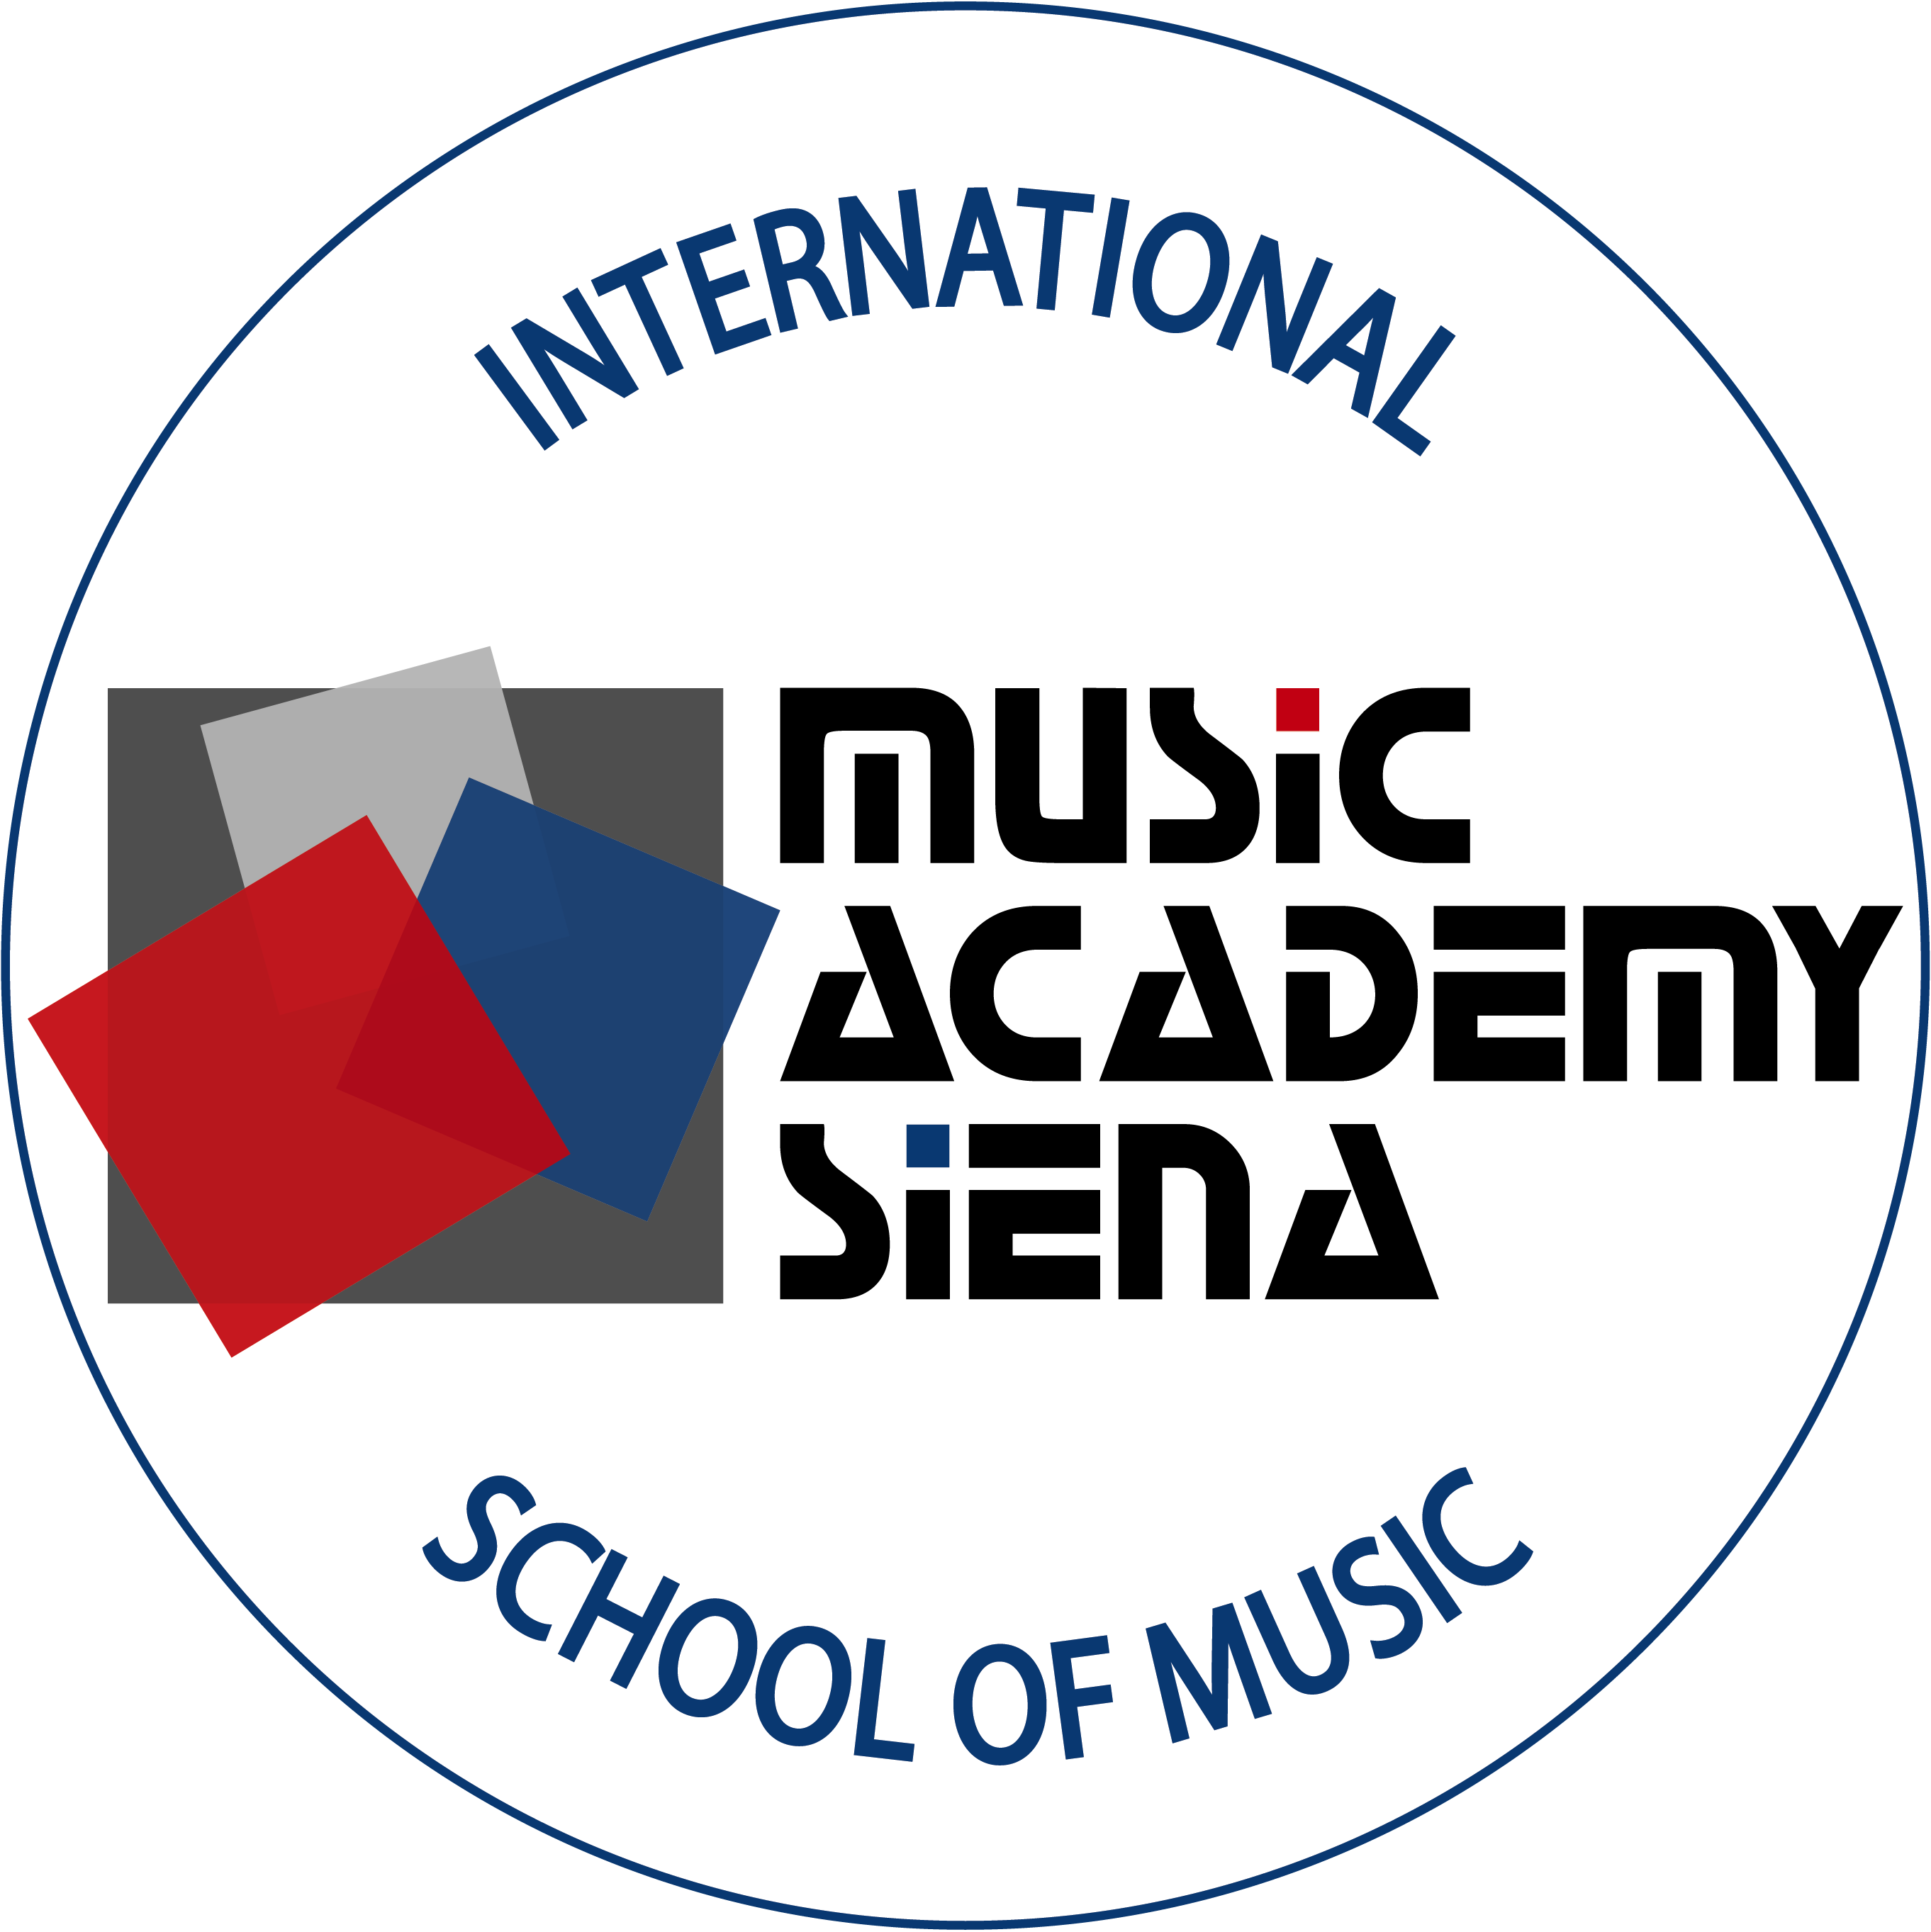 Music Academy Siena